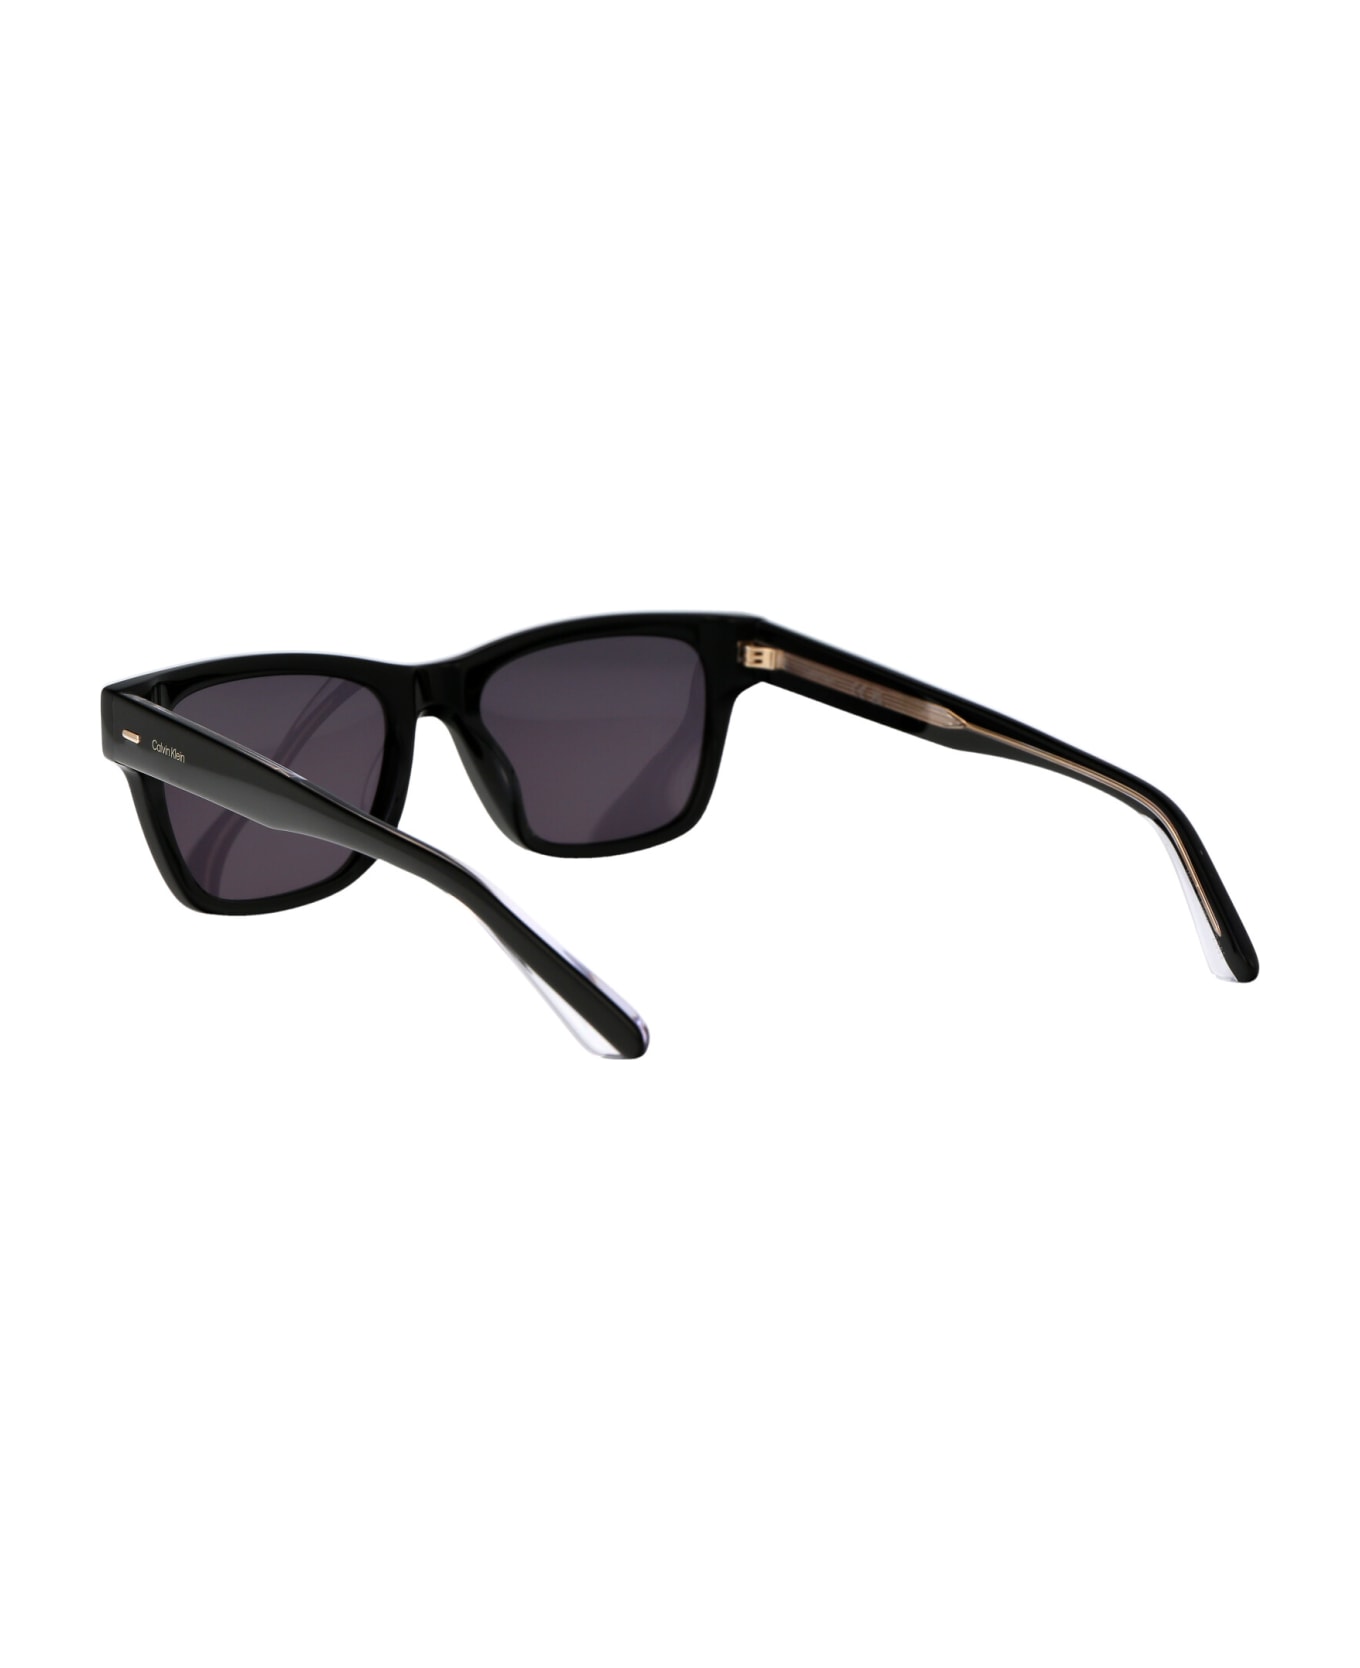 Calvin Klein Ck21528s Sunglasses - 001 BLACK